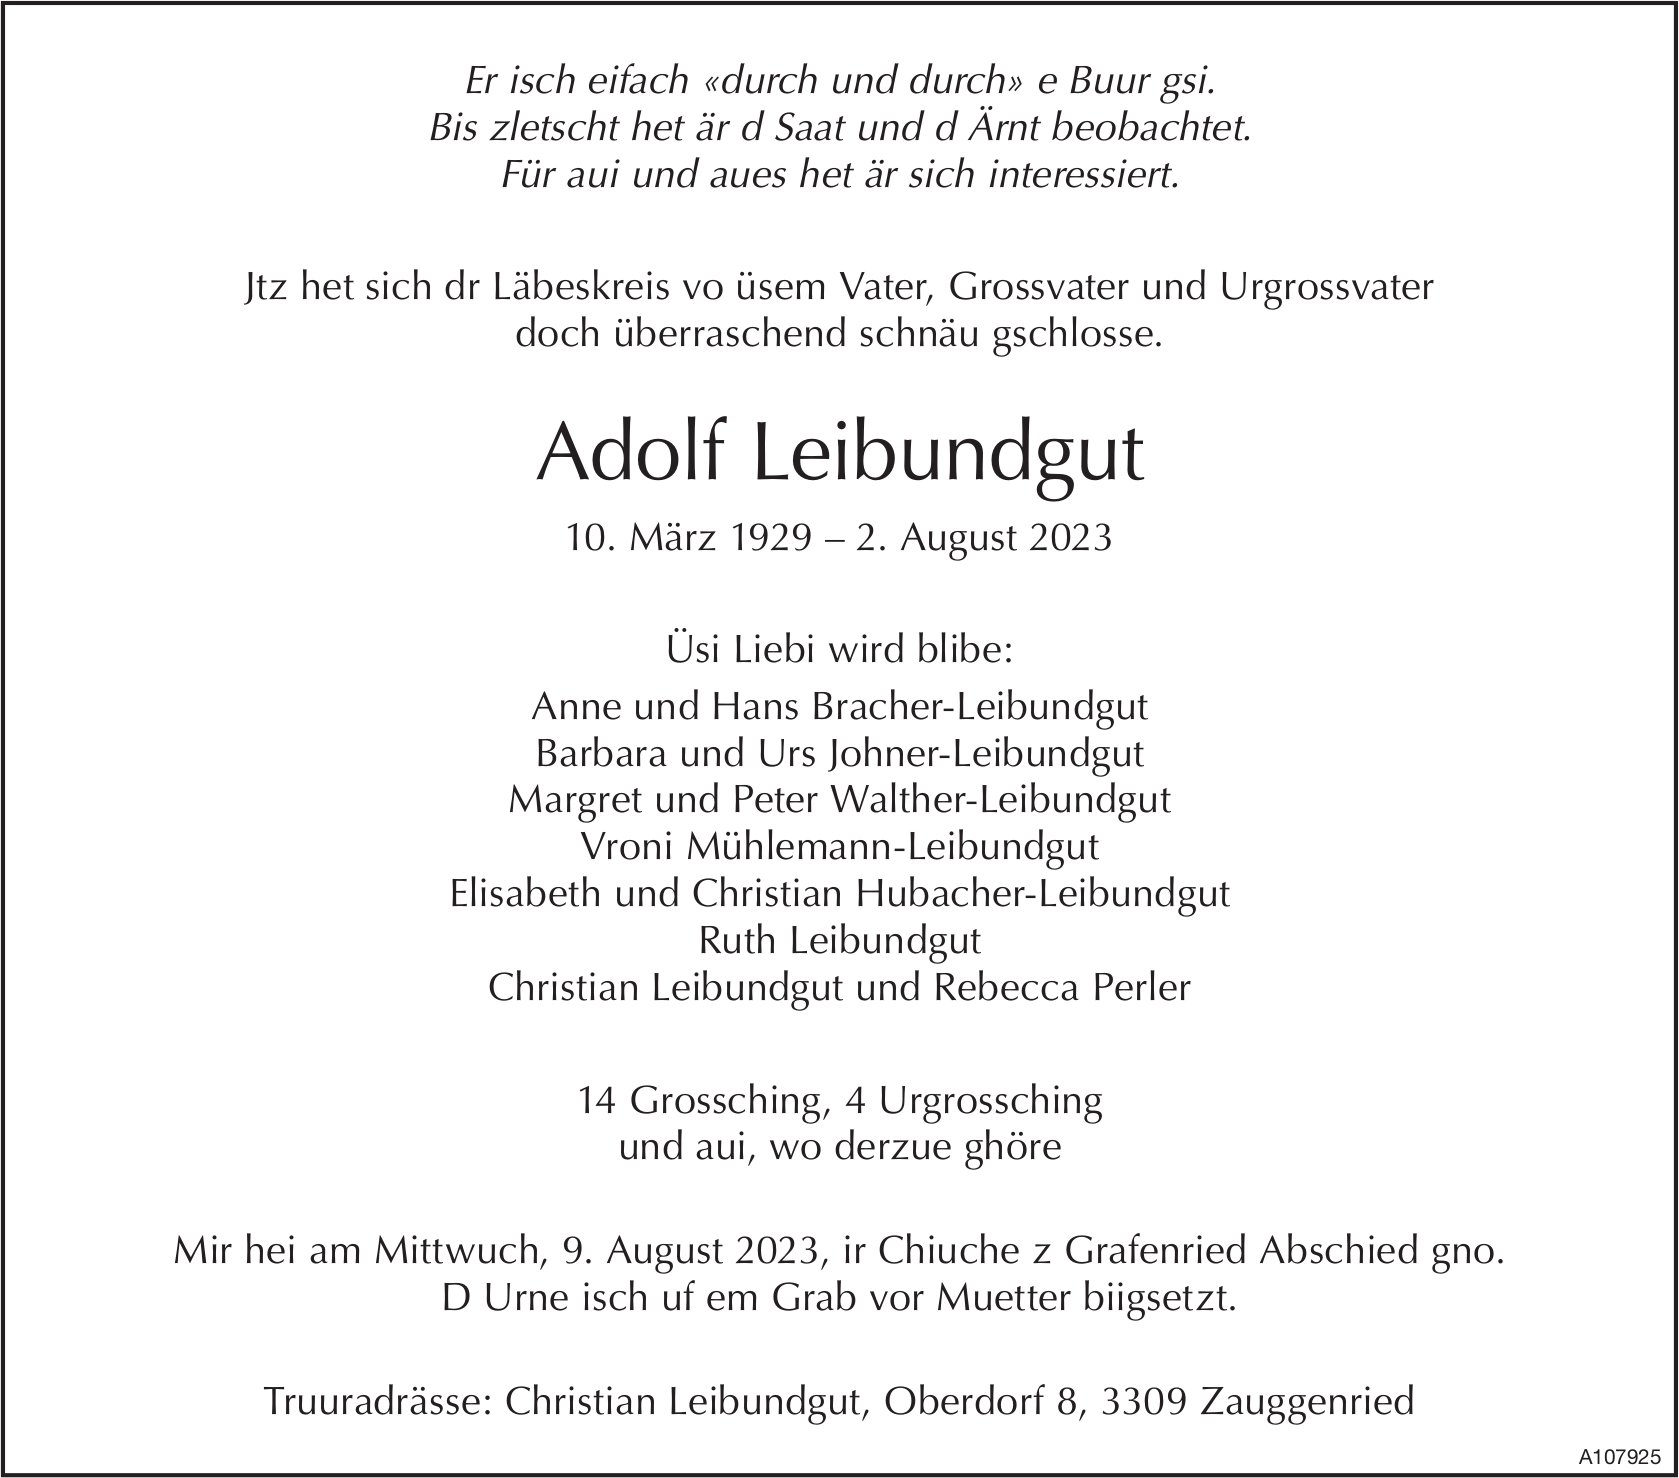 Adolf Leibundgut, August 2023 / TA